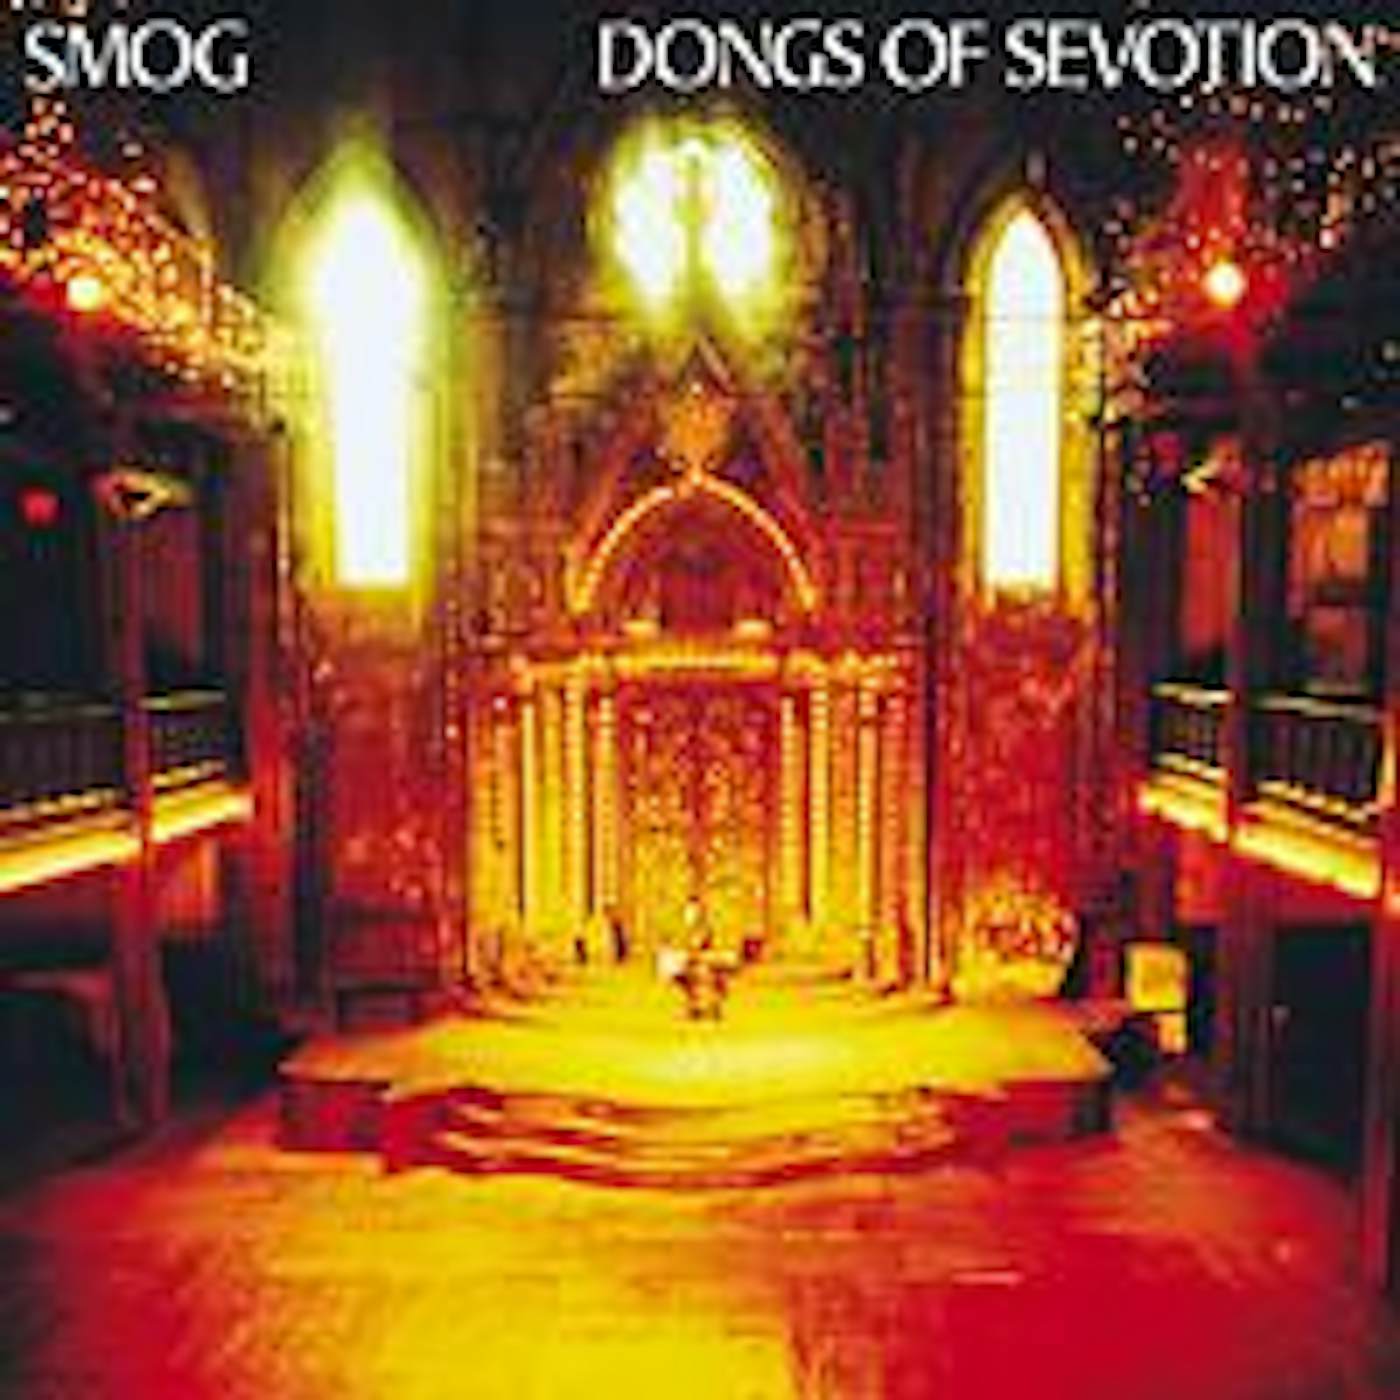 Smog DONGS OF SEVOTION Vinyl Record